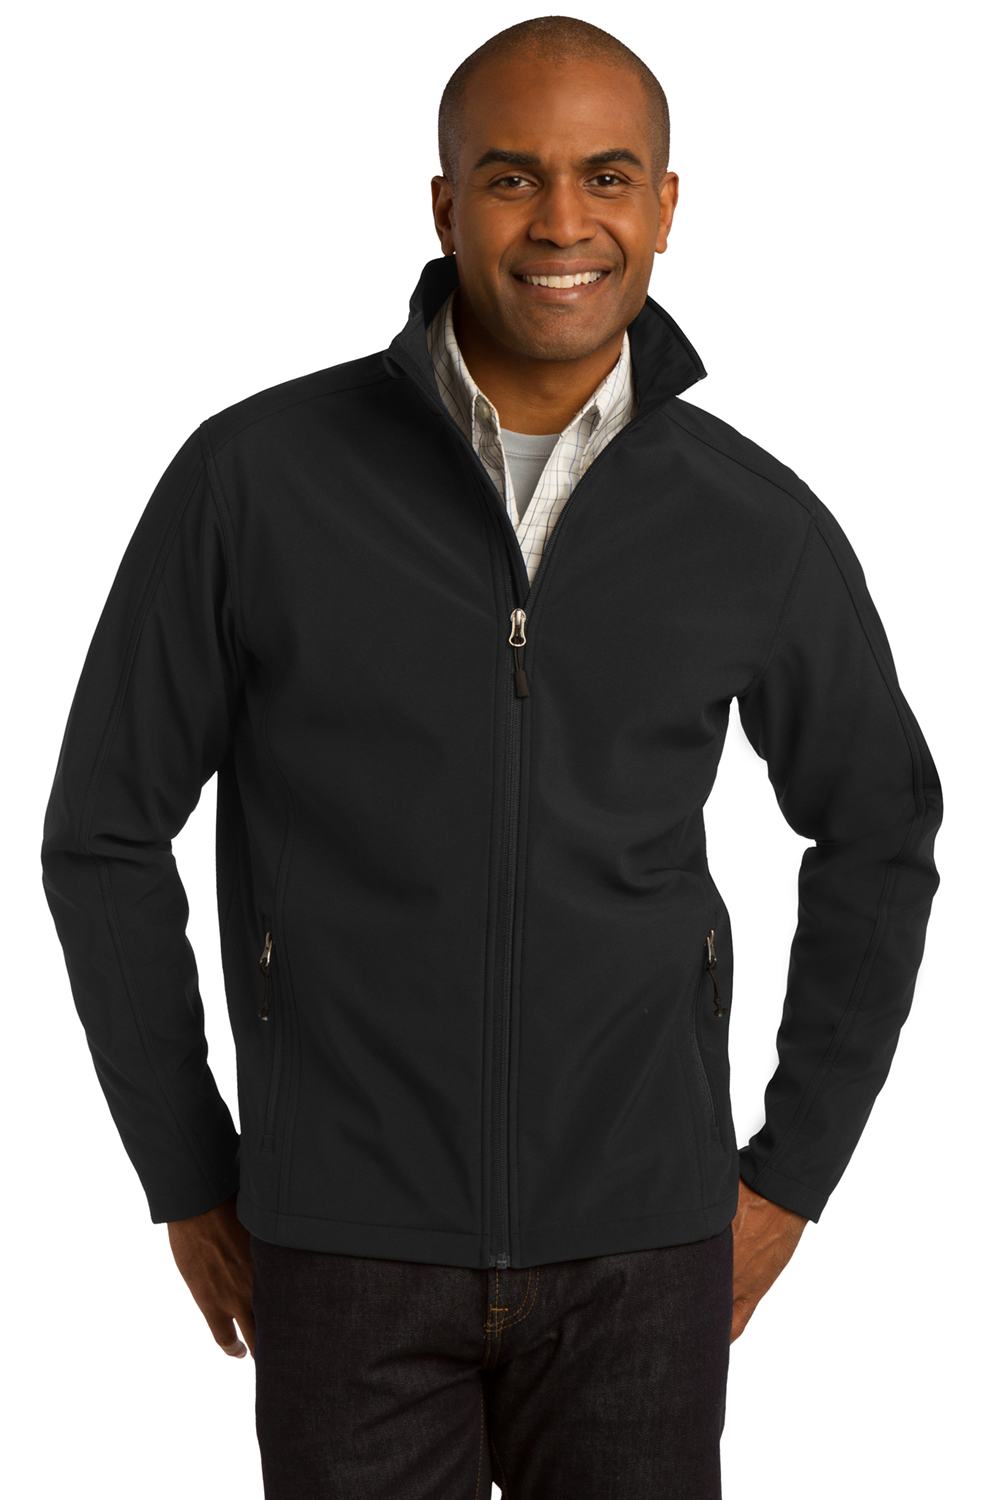 Men's Fleece Outerwear, Jackets & Sweaters | Logo Shirts Direct